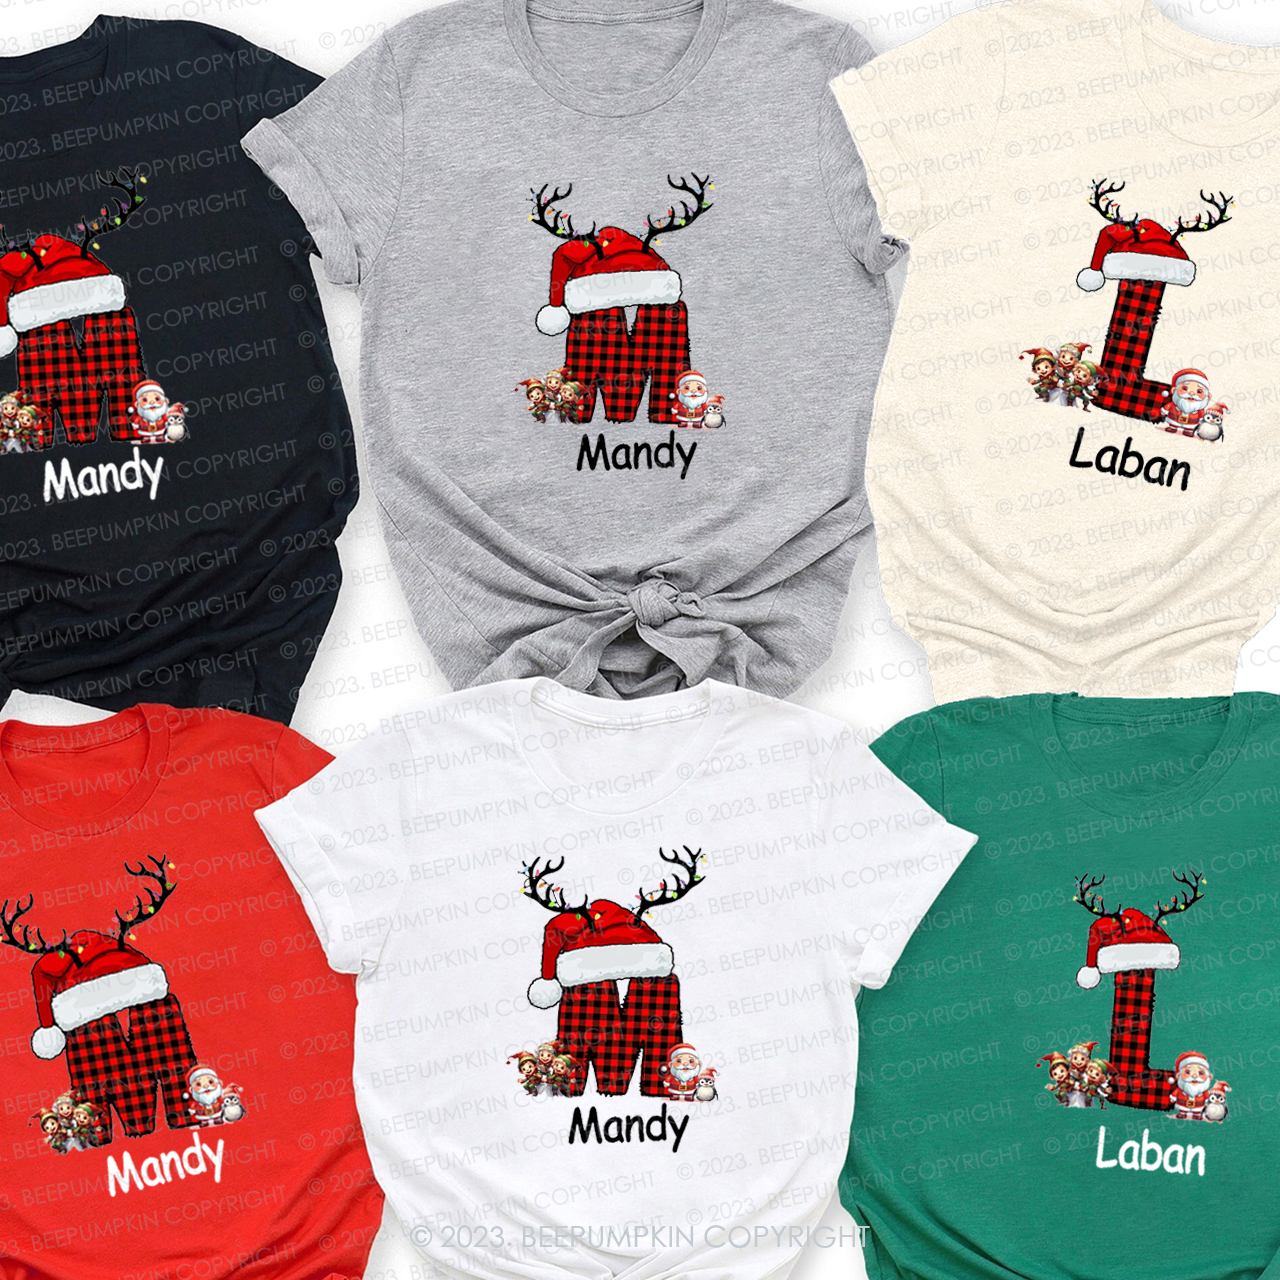 Matching Christmas Design - Elf Family - Papa Elf Boxer Briefs - Davson  Sales